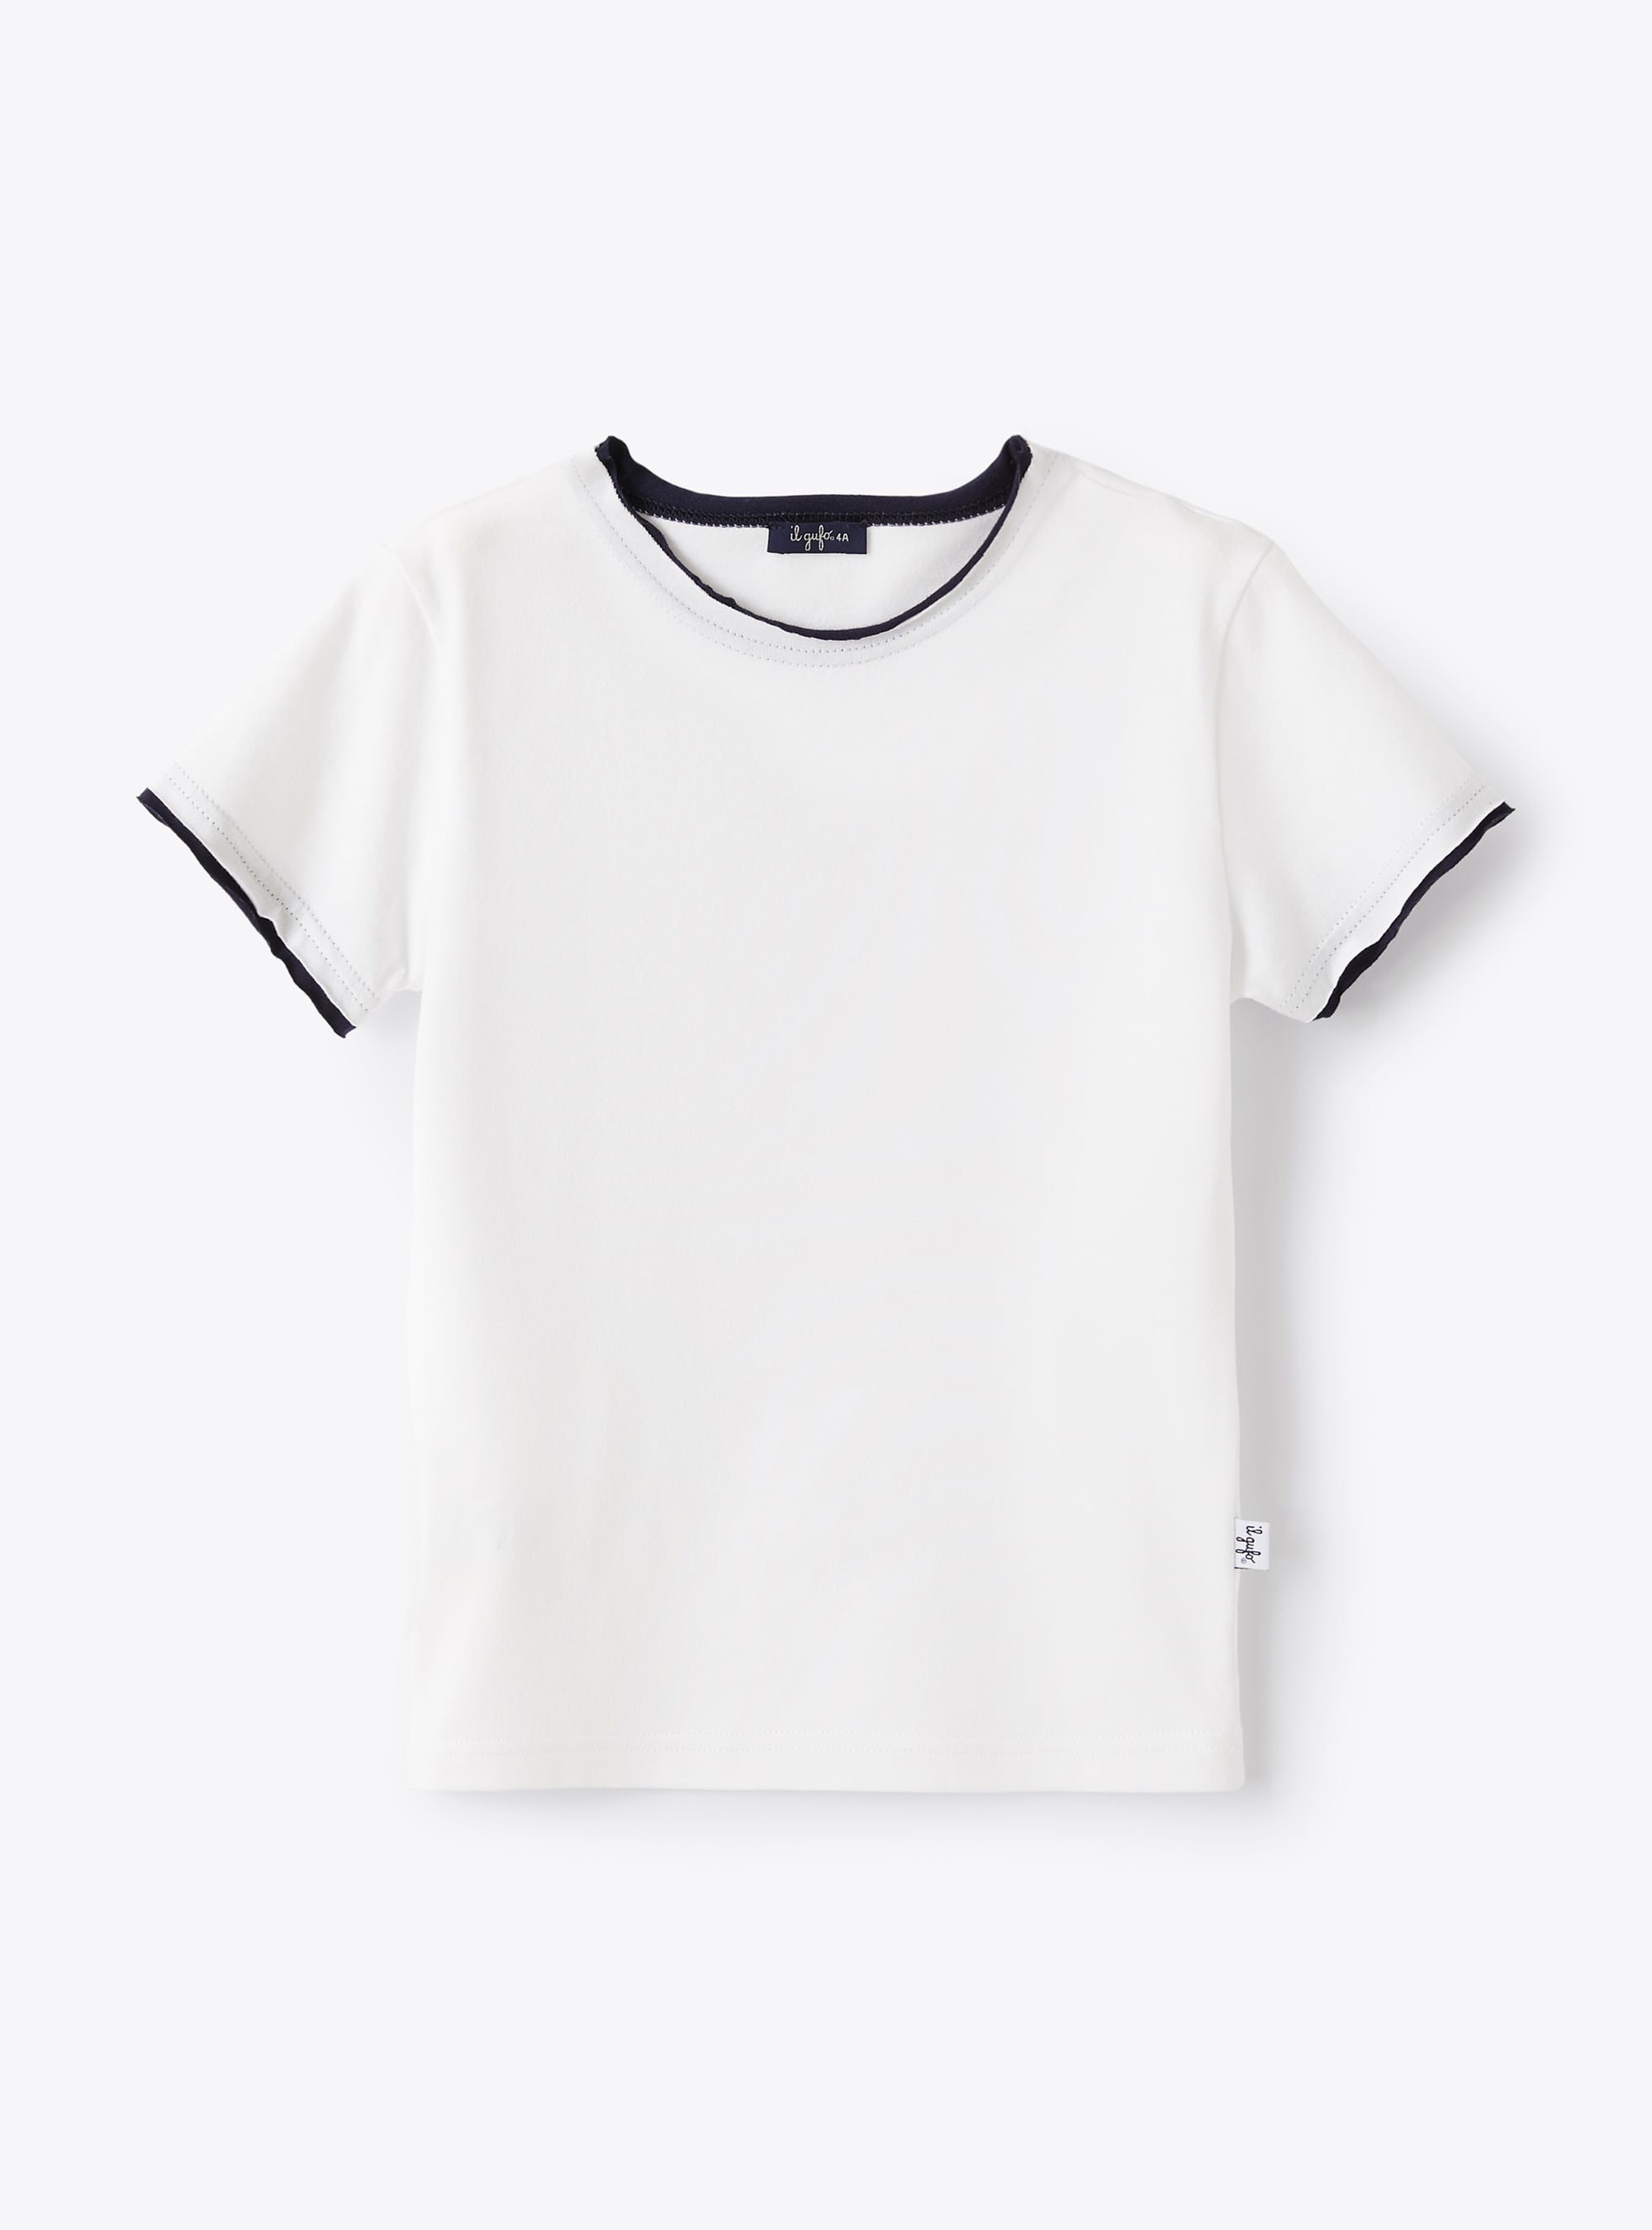 White t-shirt with blue trim - T-shirts - Il Gufo